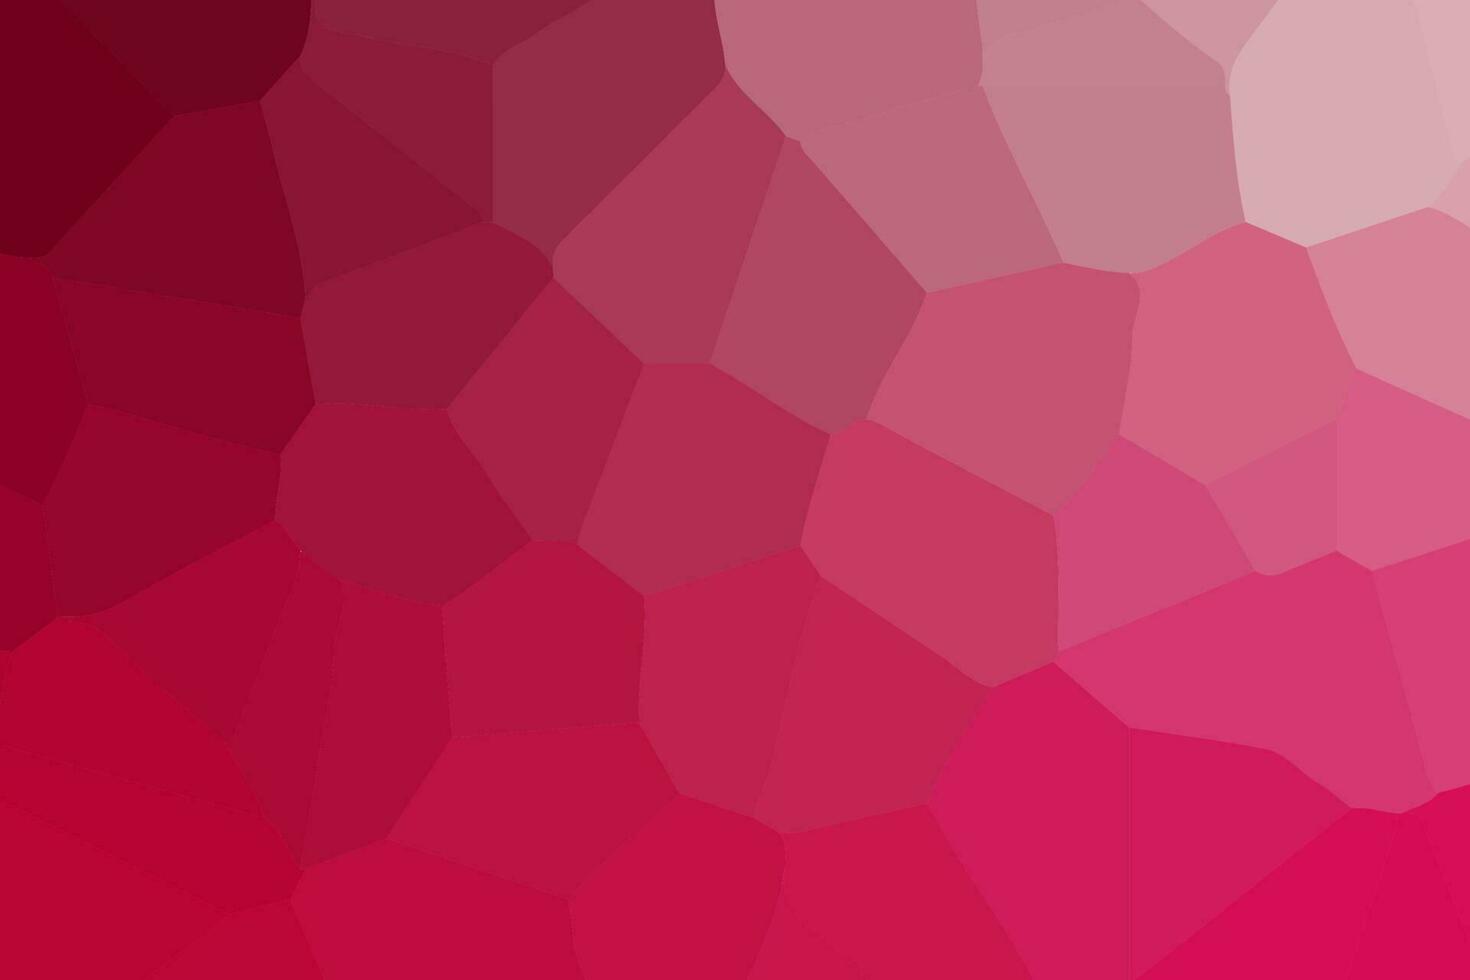 lowpoly abstract achtergrond kleur rood en roze vector